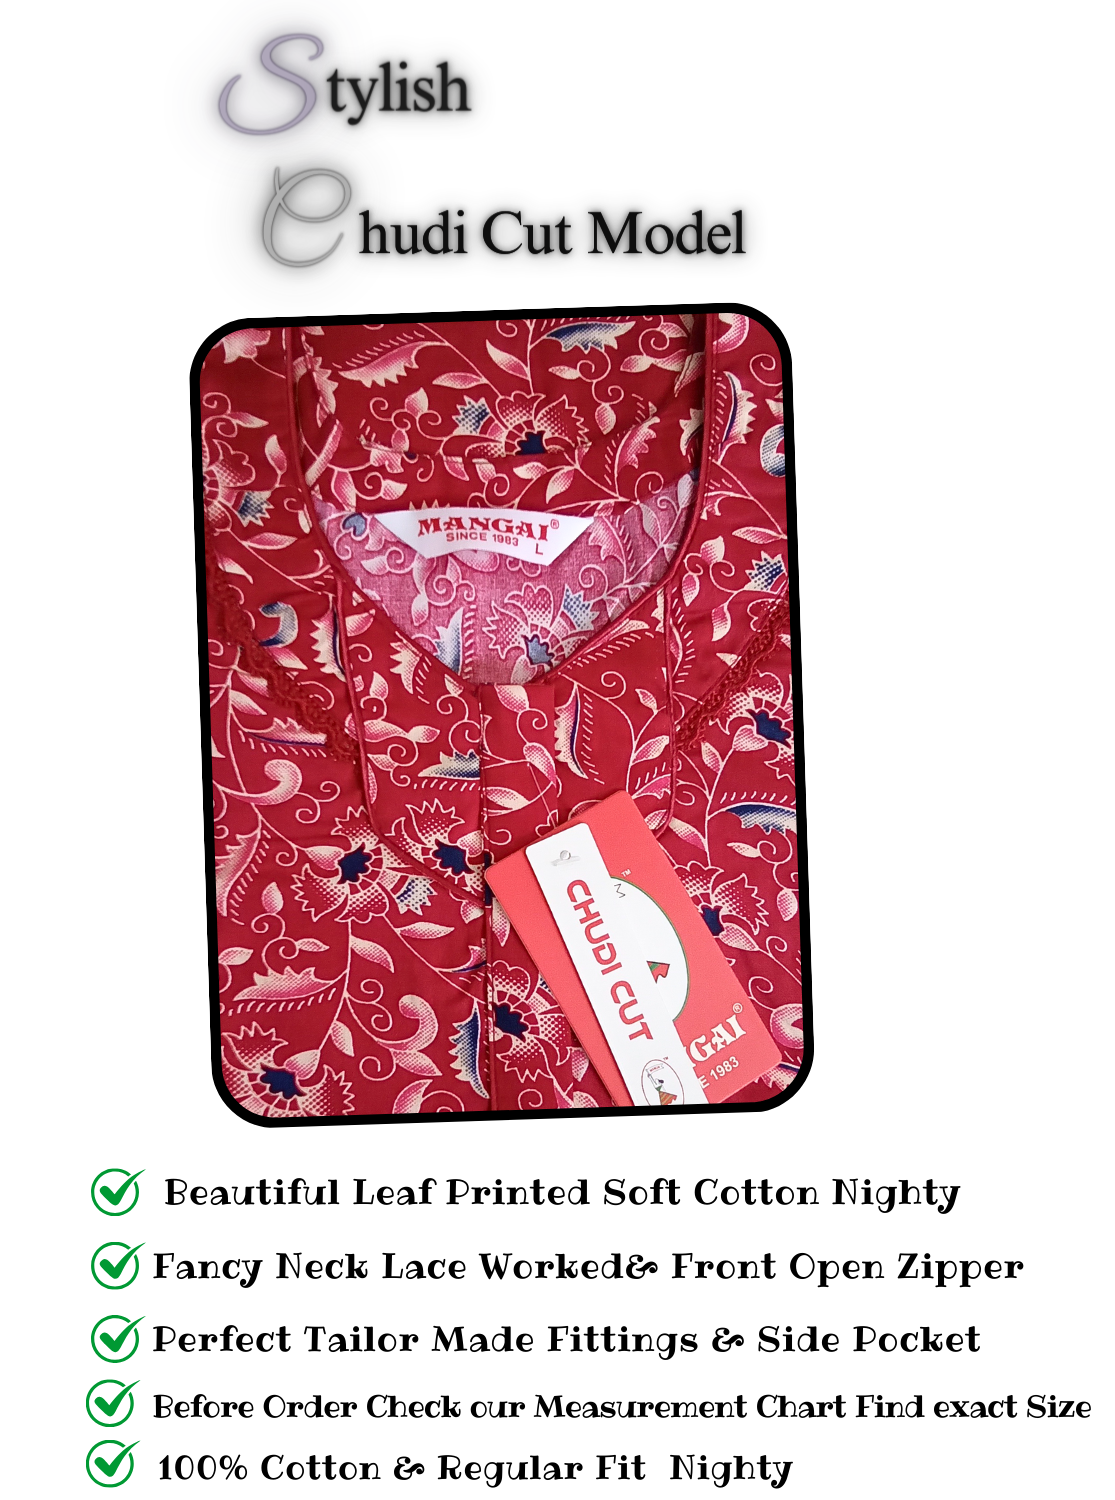 MANGAI Cotton CHUDI CUT Model Nighties - Fancy Neck | With Side Pocket |Shrinkage Free Nighties | Stylish Collection's for Trendy Women's